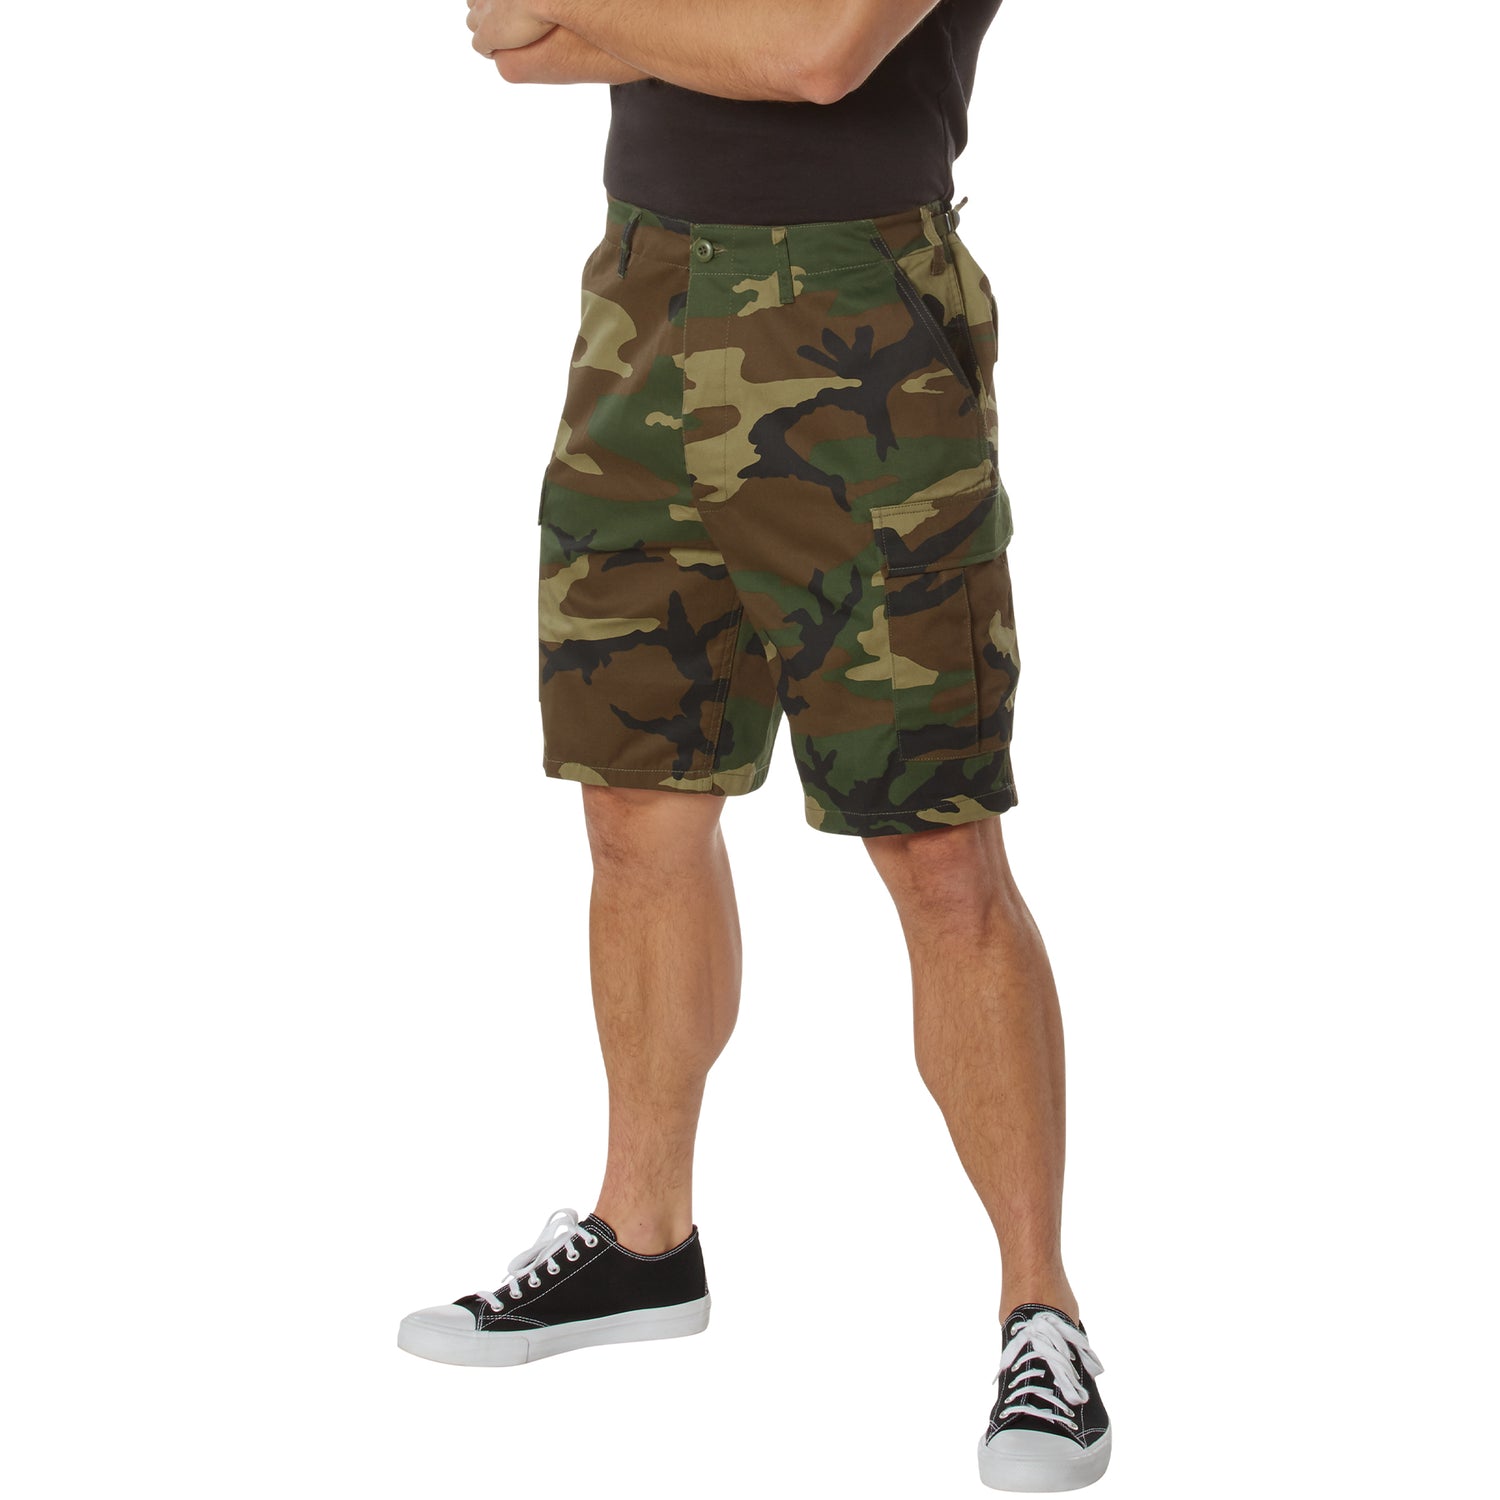 Shop Military E.C.W.C.S. Gen III Level II Underwear Tops - Fatigues Army  Navy